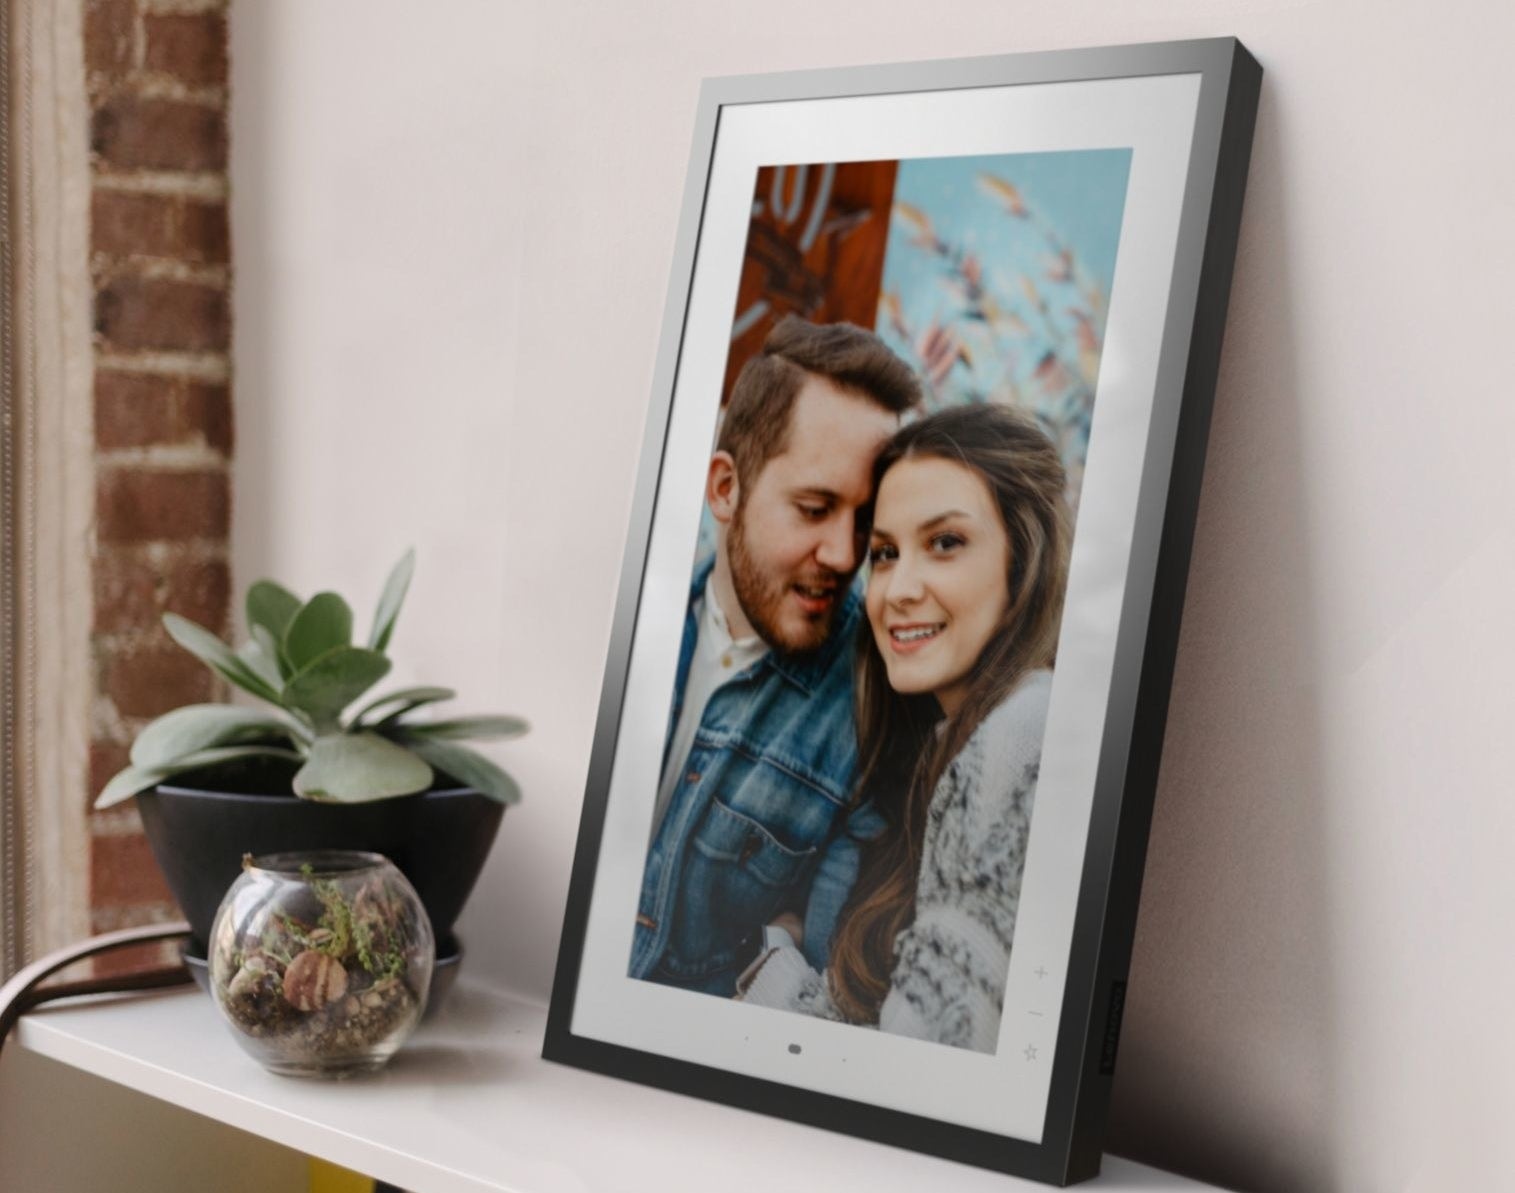 A metallic grey smart digital photo frame